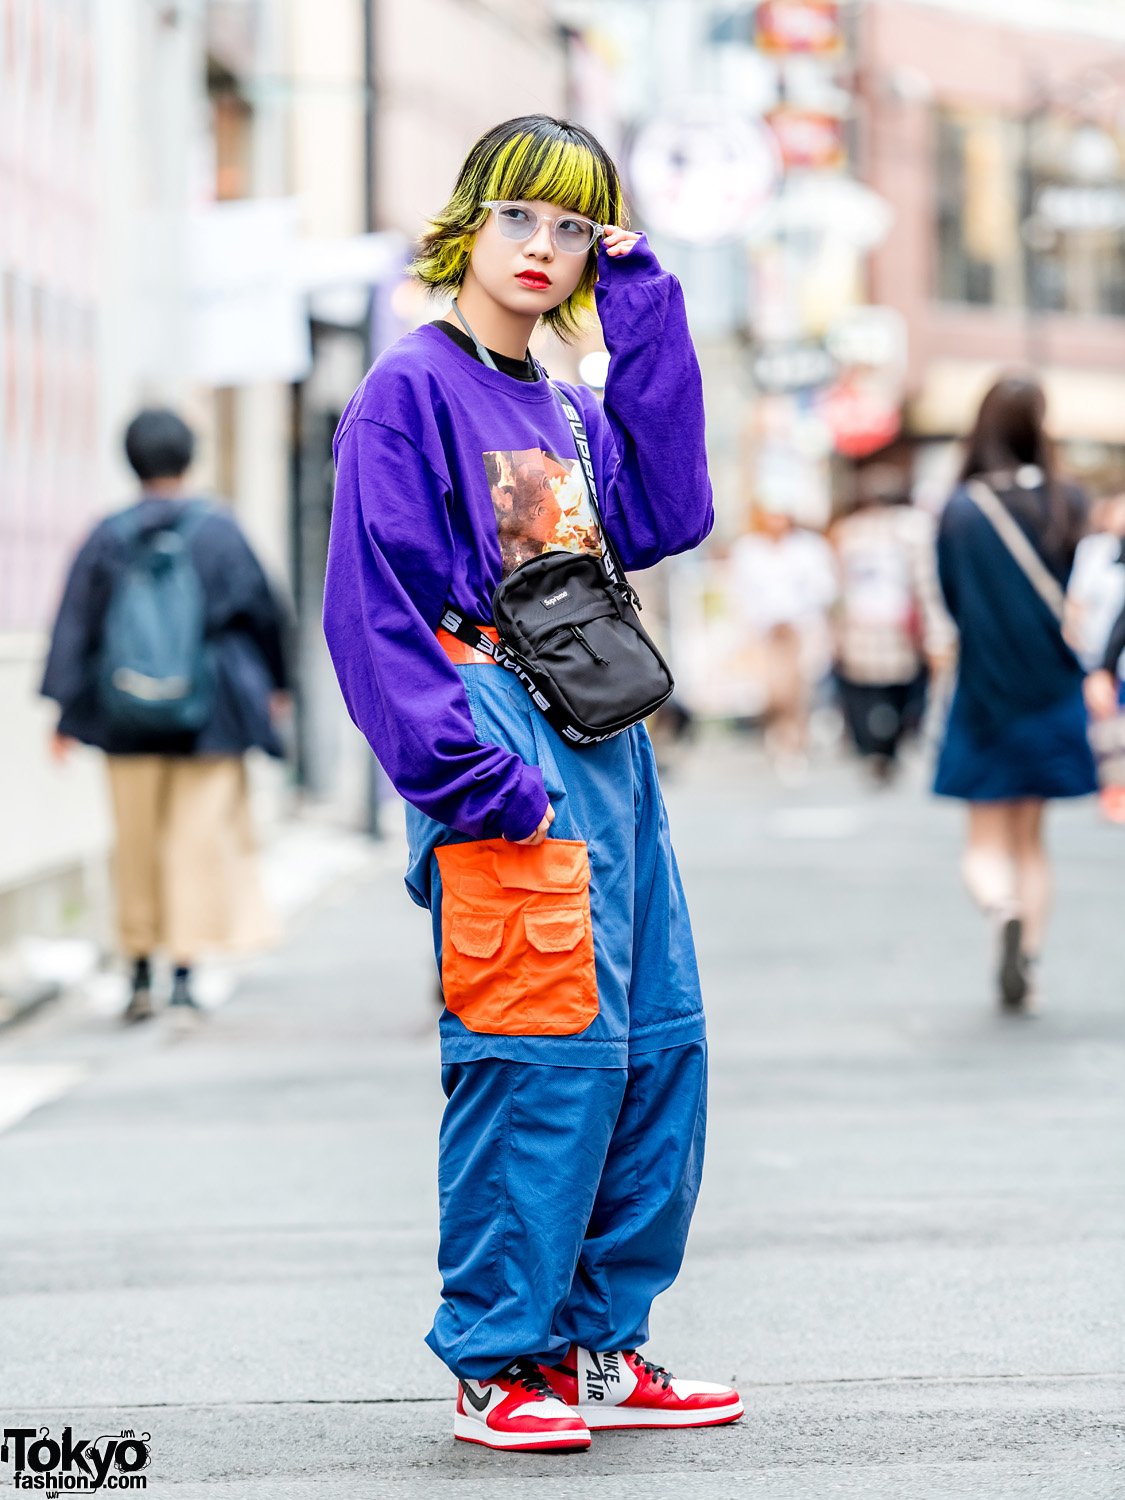 Tokyo Fashion on Twitter: Tokyo on the street in Harajuku wearing an O.U.T. "Bonfire" sweatshirt with vintage track pants, Nike Air Jordans &amp; Supreme crossbody bag #原宿 https://t.co/cHe2GfdHU0 https://t.co/f49gFQpBTh" /